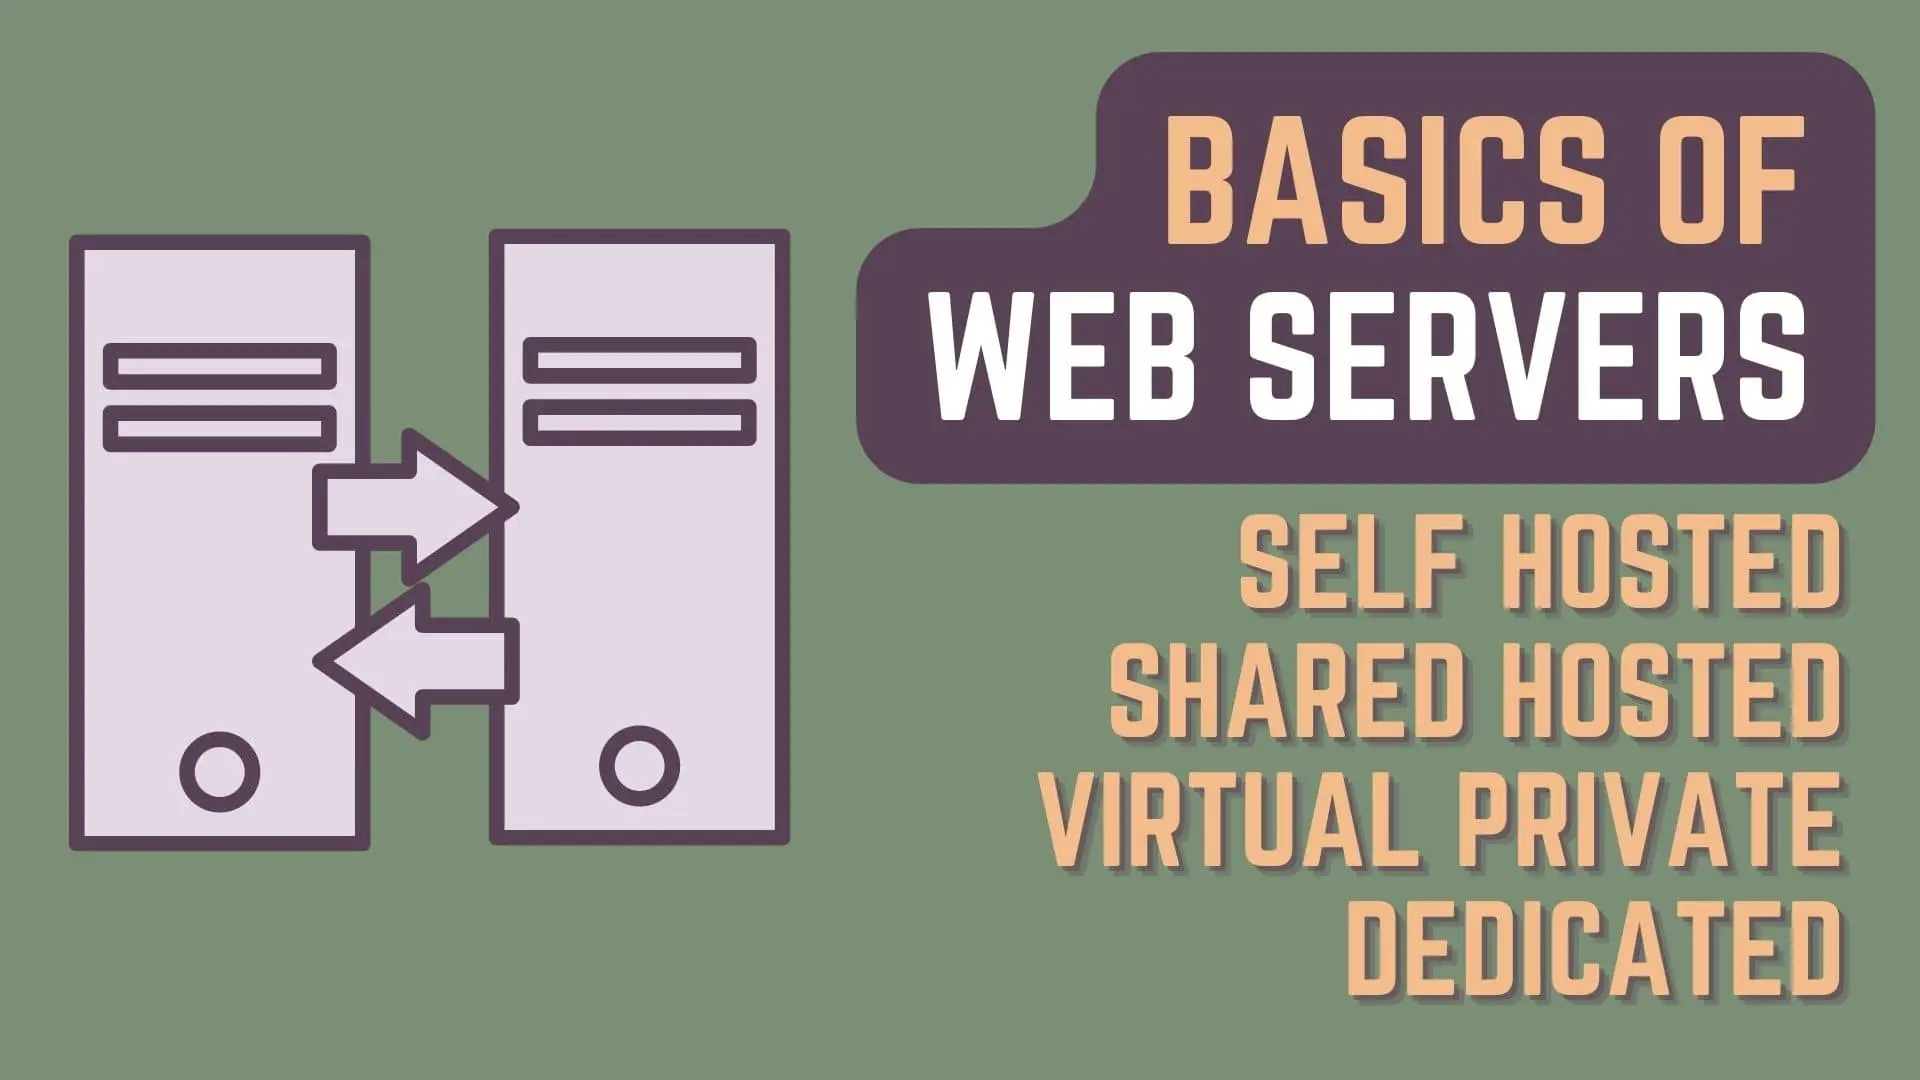 Basics Of Web Servers - Self Hosted, Shared Hosted, Virtual Private, Dedicated Web Servers - Basics Of Internet